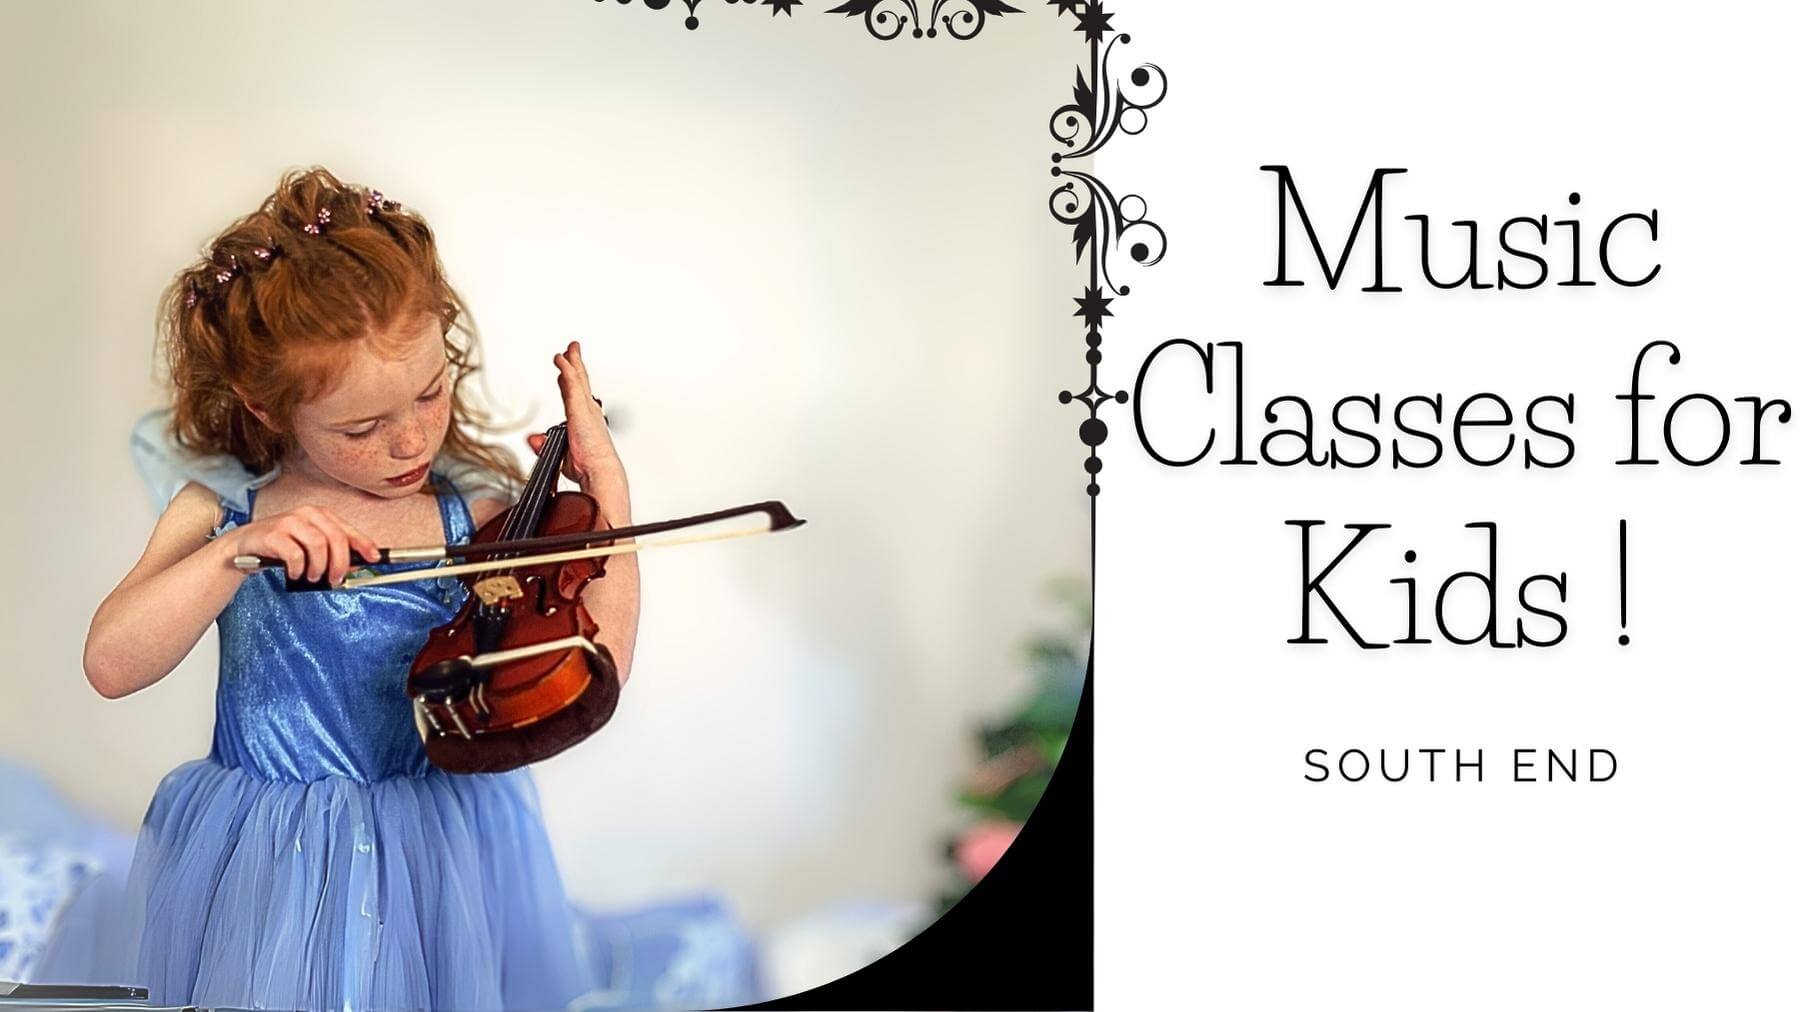 Music Classes for Kids in South End, Massachusetts